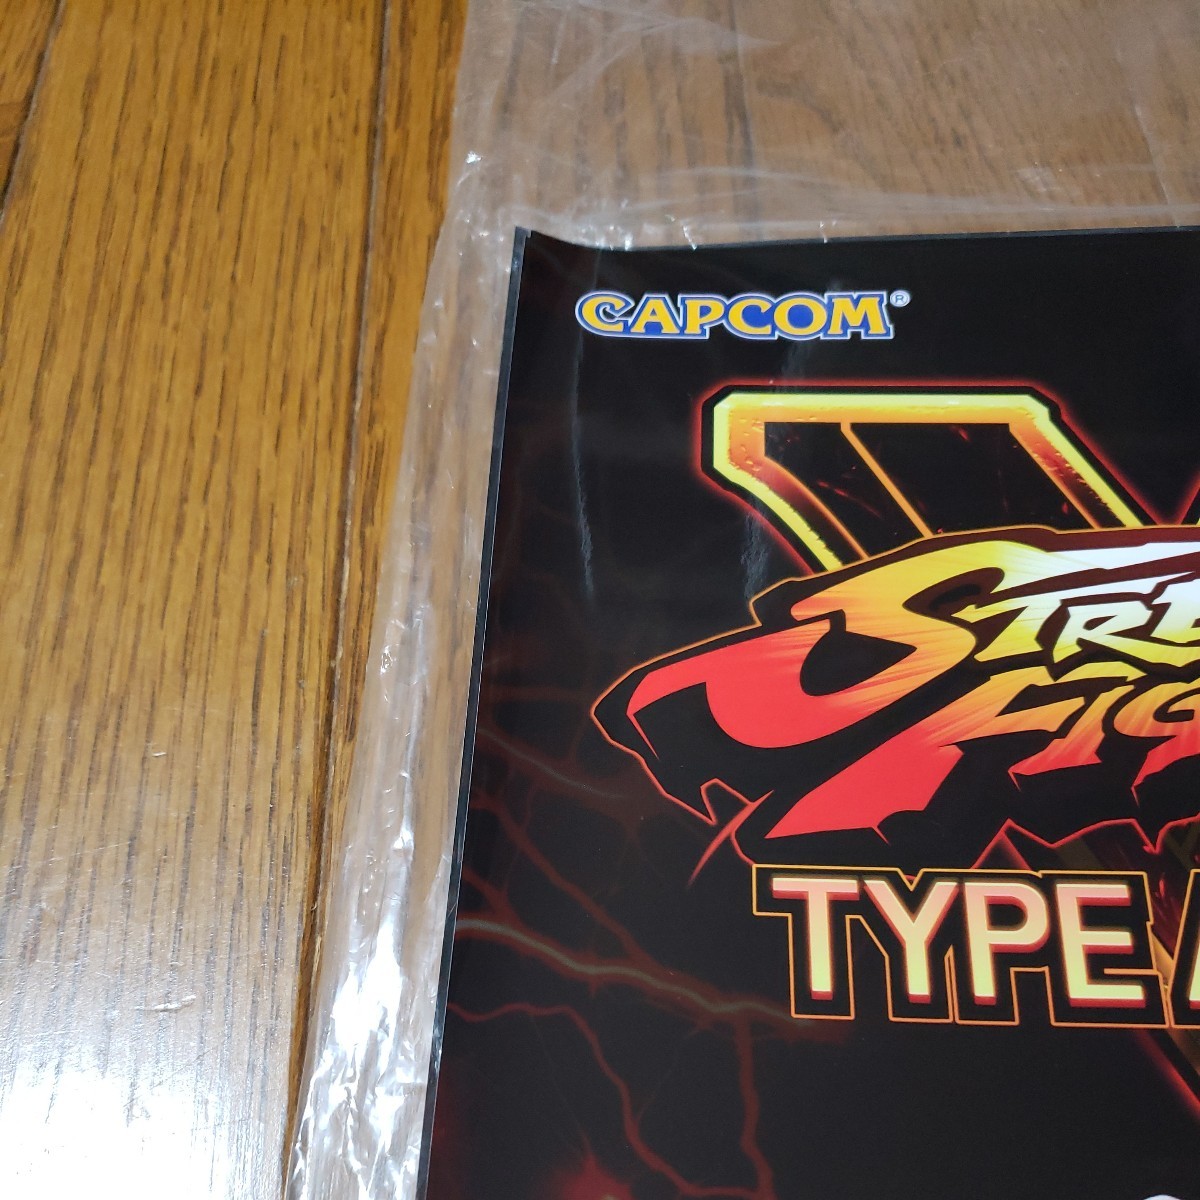  Capcom Street Fighter Vzeku tanzaku poster 